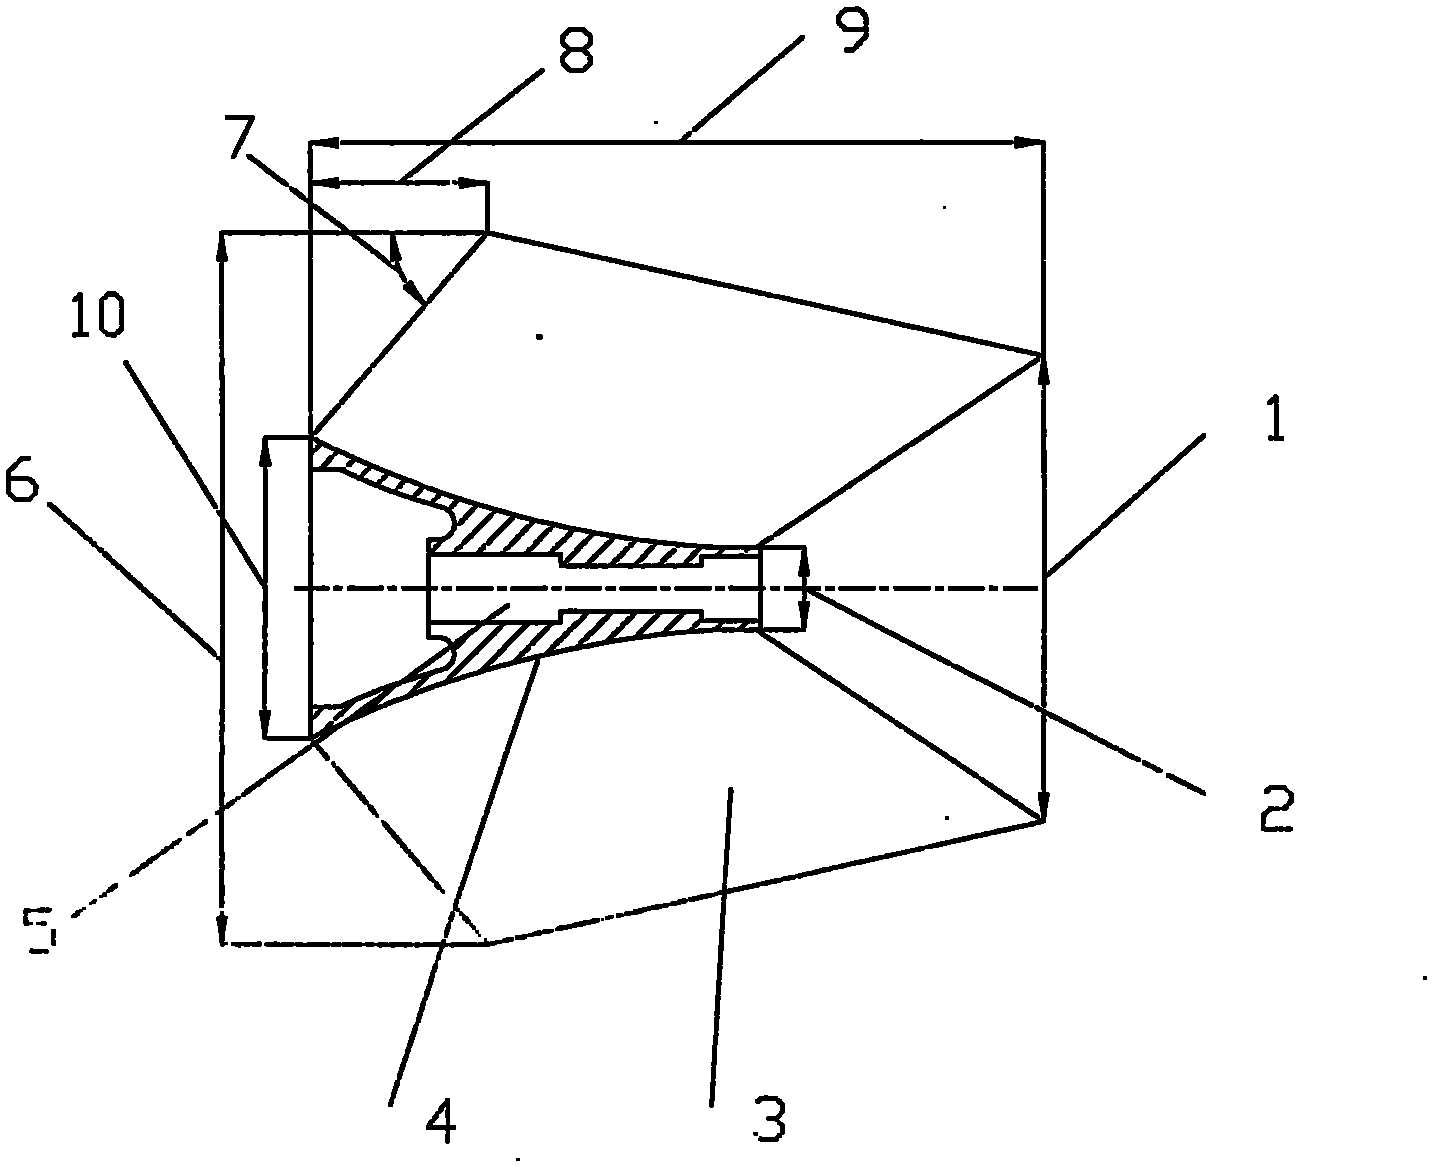 Method for designing single-screw axial-flow pump impeller